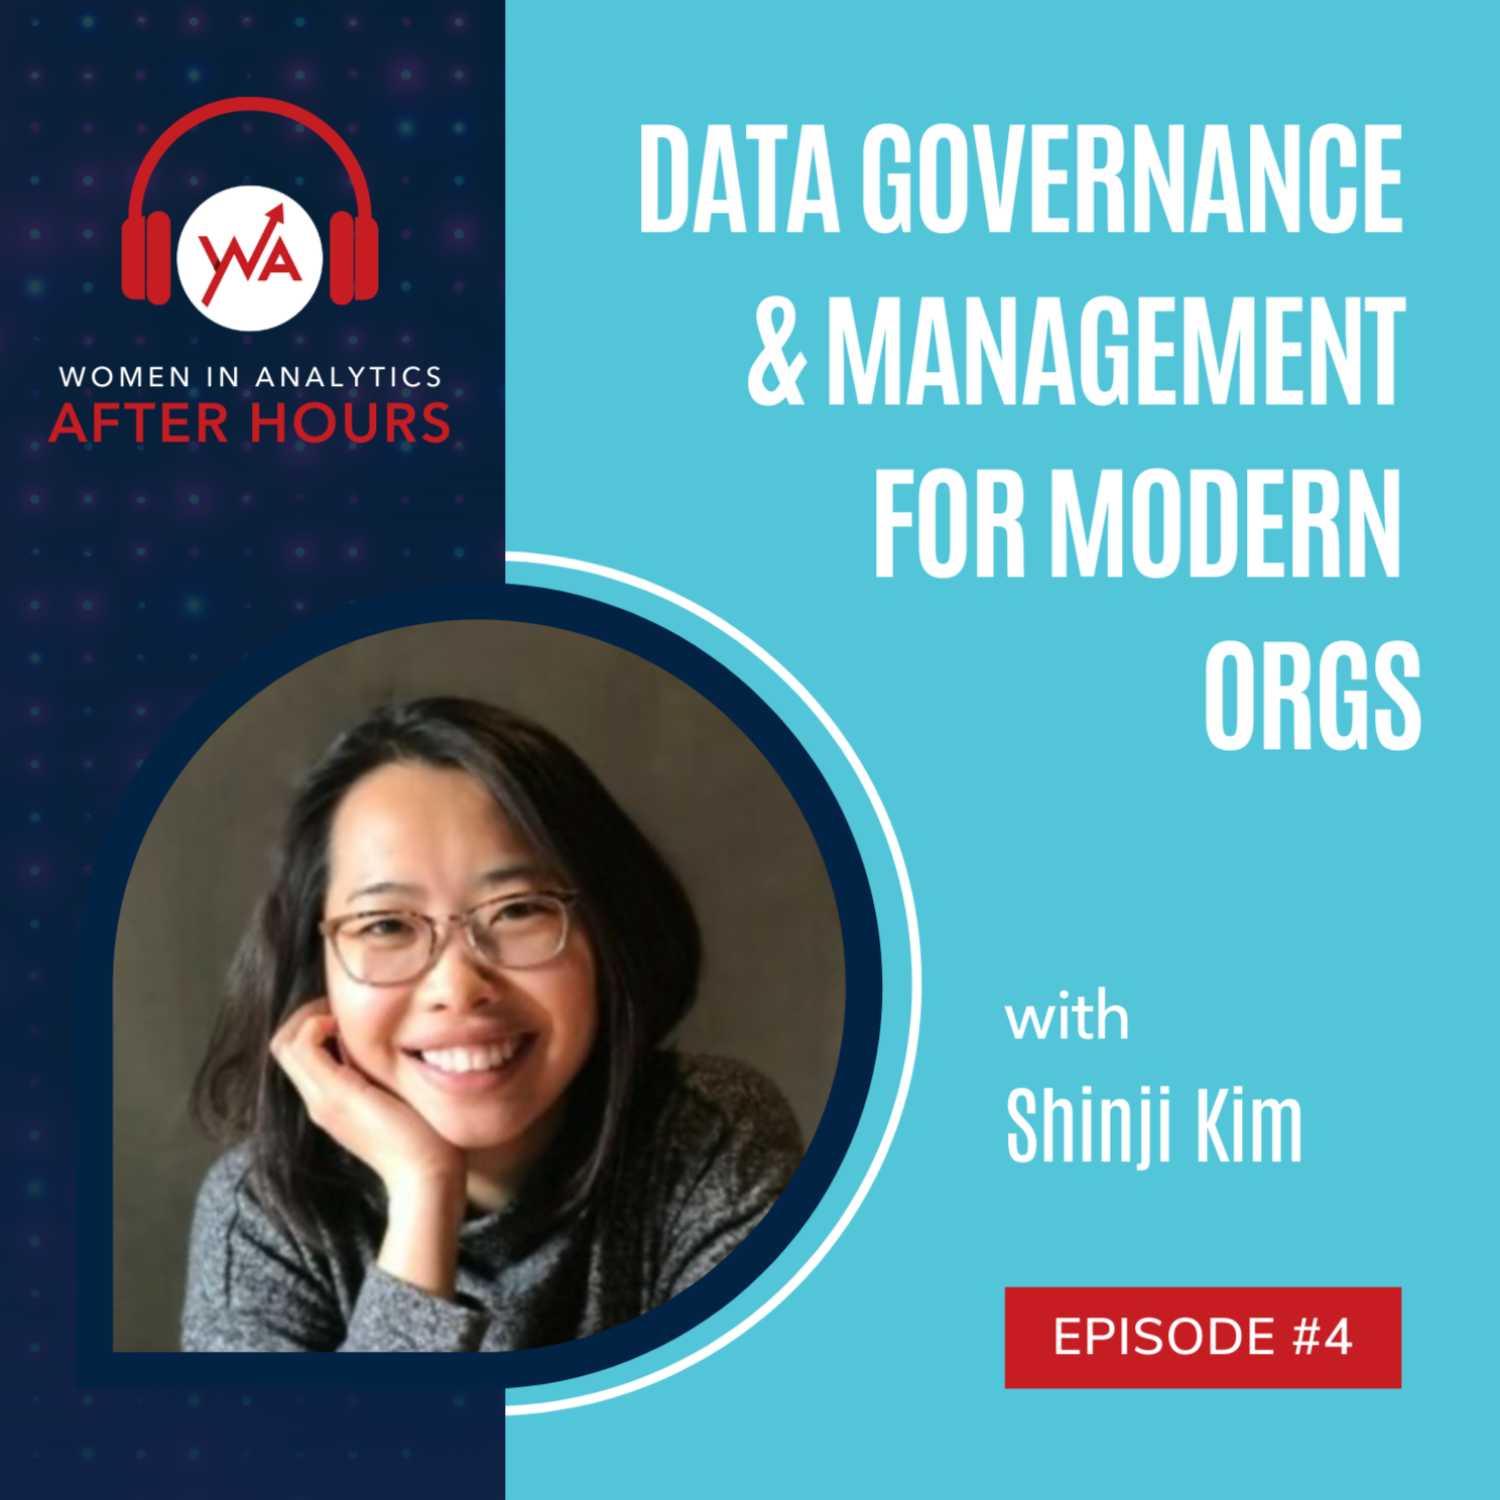 Episode 4 - Data Governance & Management for Modern Orgs with Shinji Kim